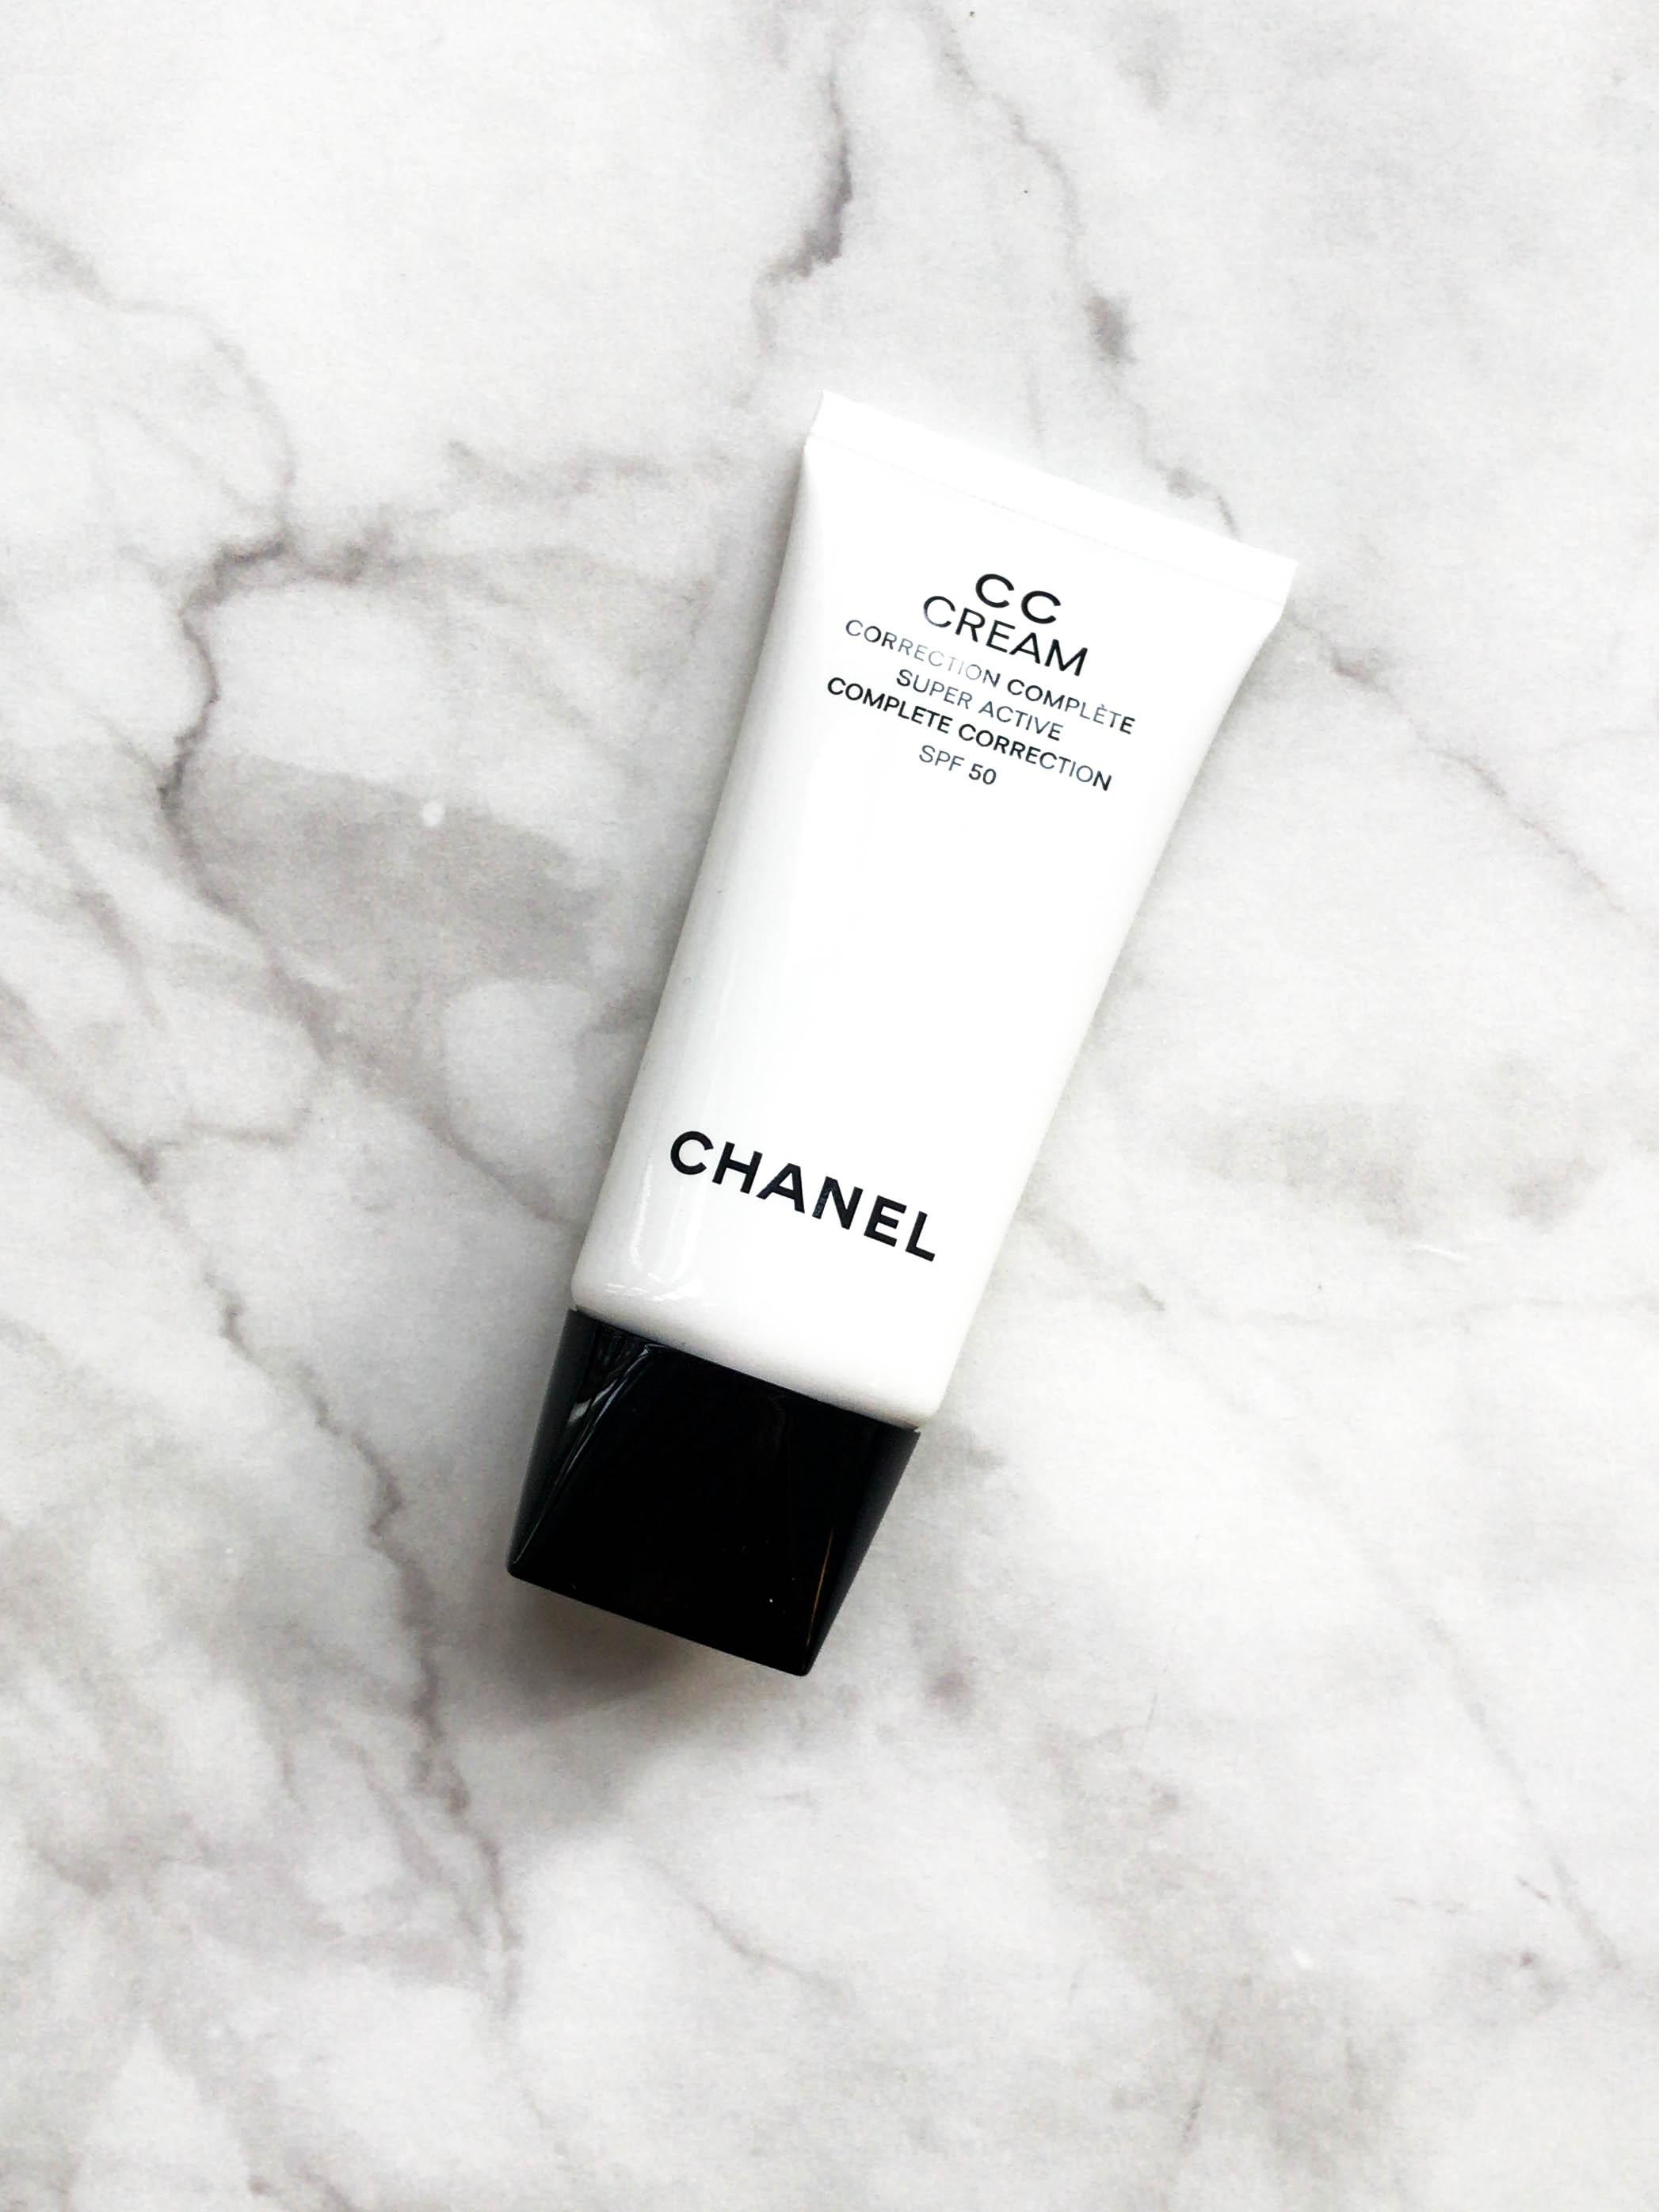 Teint-Korrigierer: Chanel Correction Complète CC Cream 
#beautylieblinge #chanel #cccream #chanelbeauty